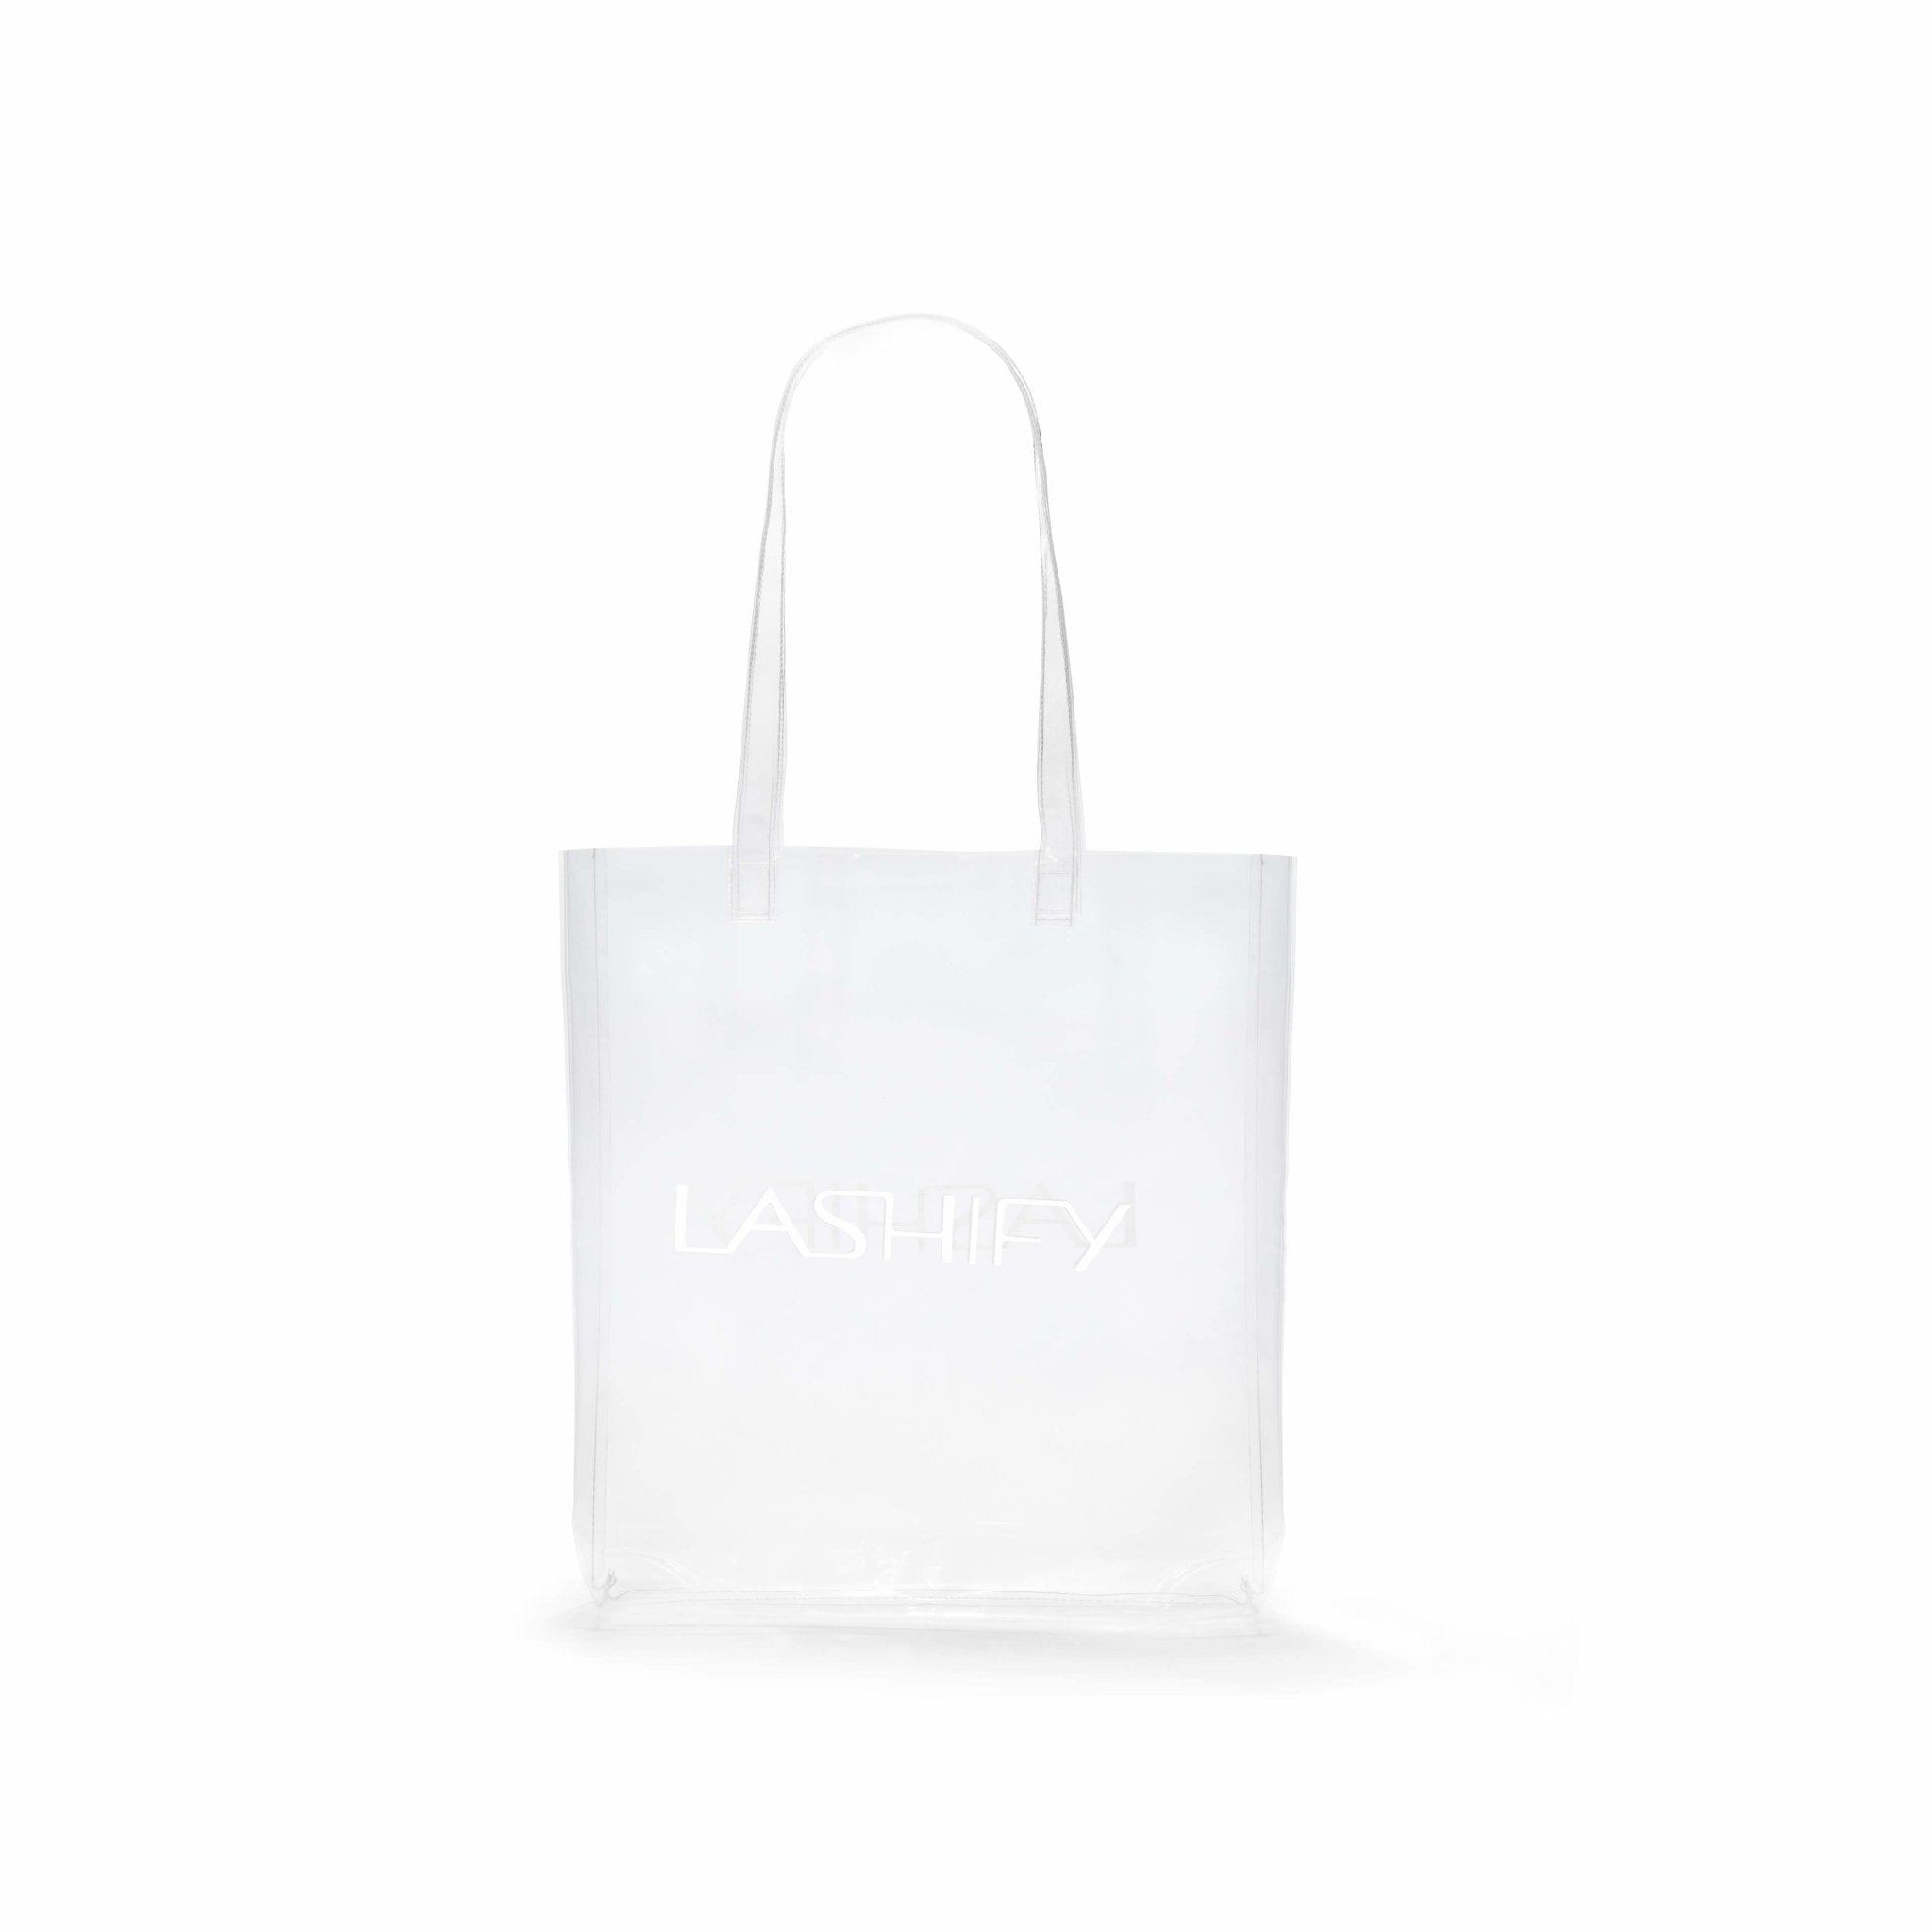 Clear Tote Bag  Lashify Merchandise